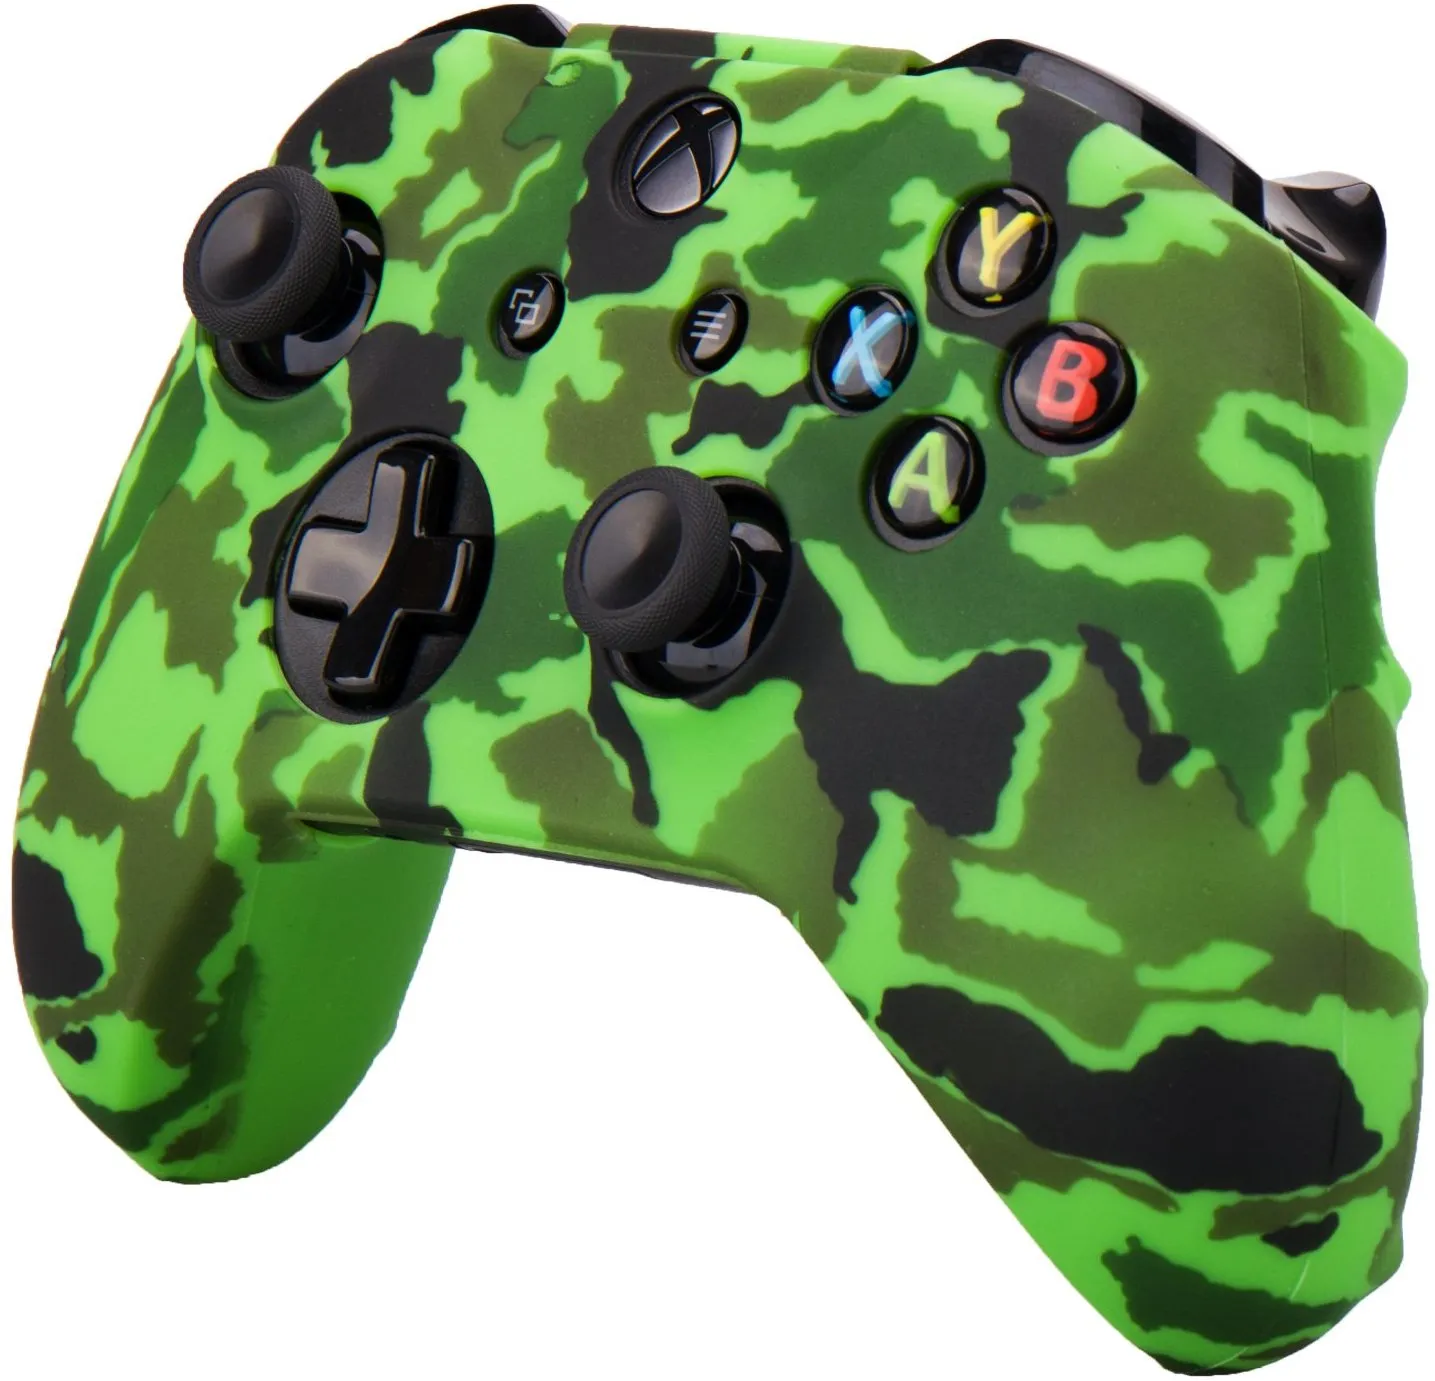 Etui en caoutchouc de silicone Camouflage multicolore Etui Skin Grip Cover pour Xbox One